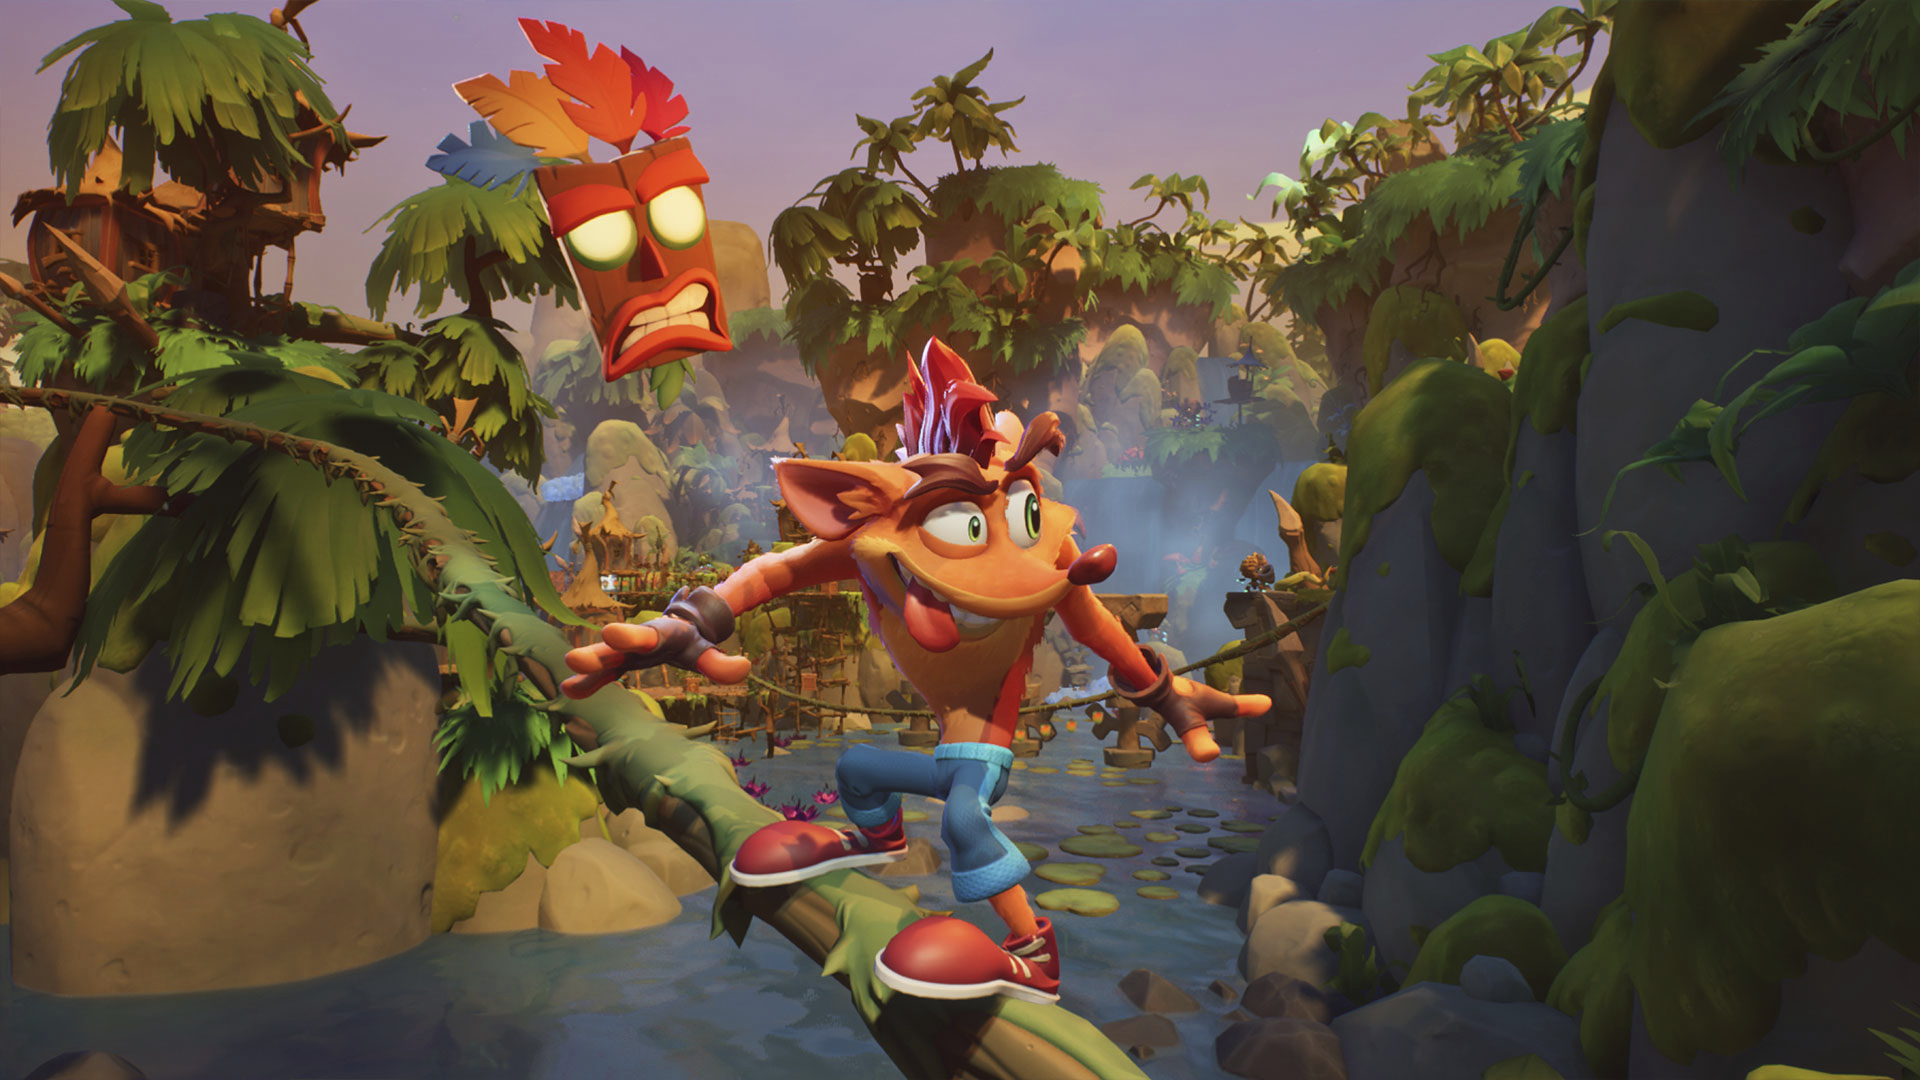 Crash Bandicoot 4 – It's About Time – снимок экрана, на котором Крэш скользит по стволу дерева через джунгли.